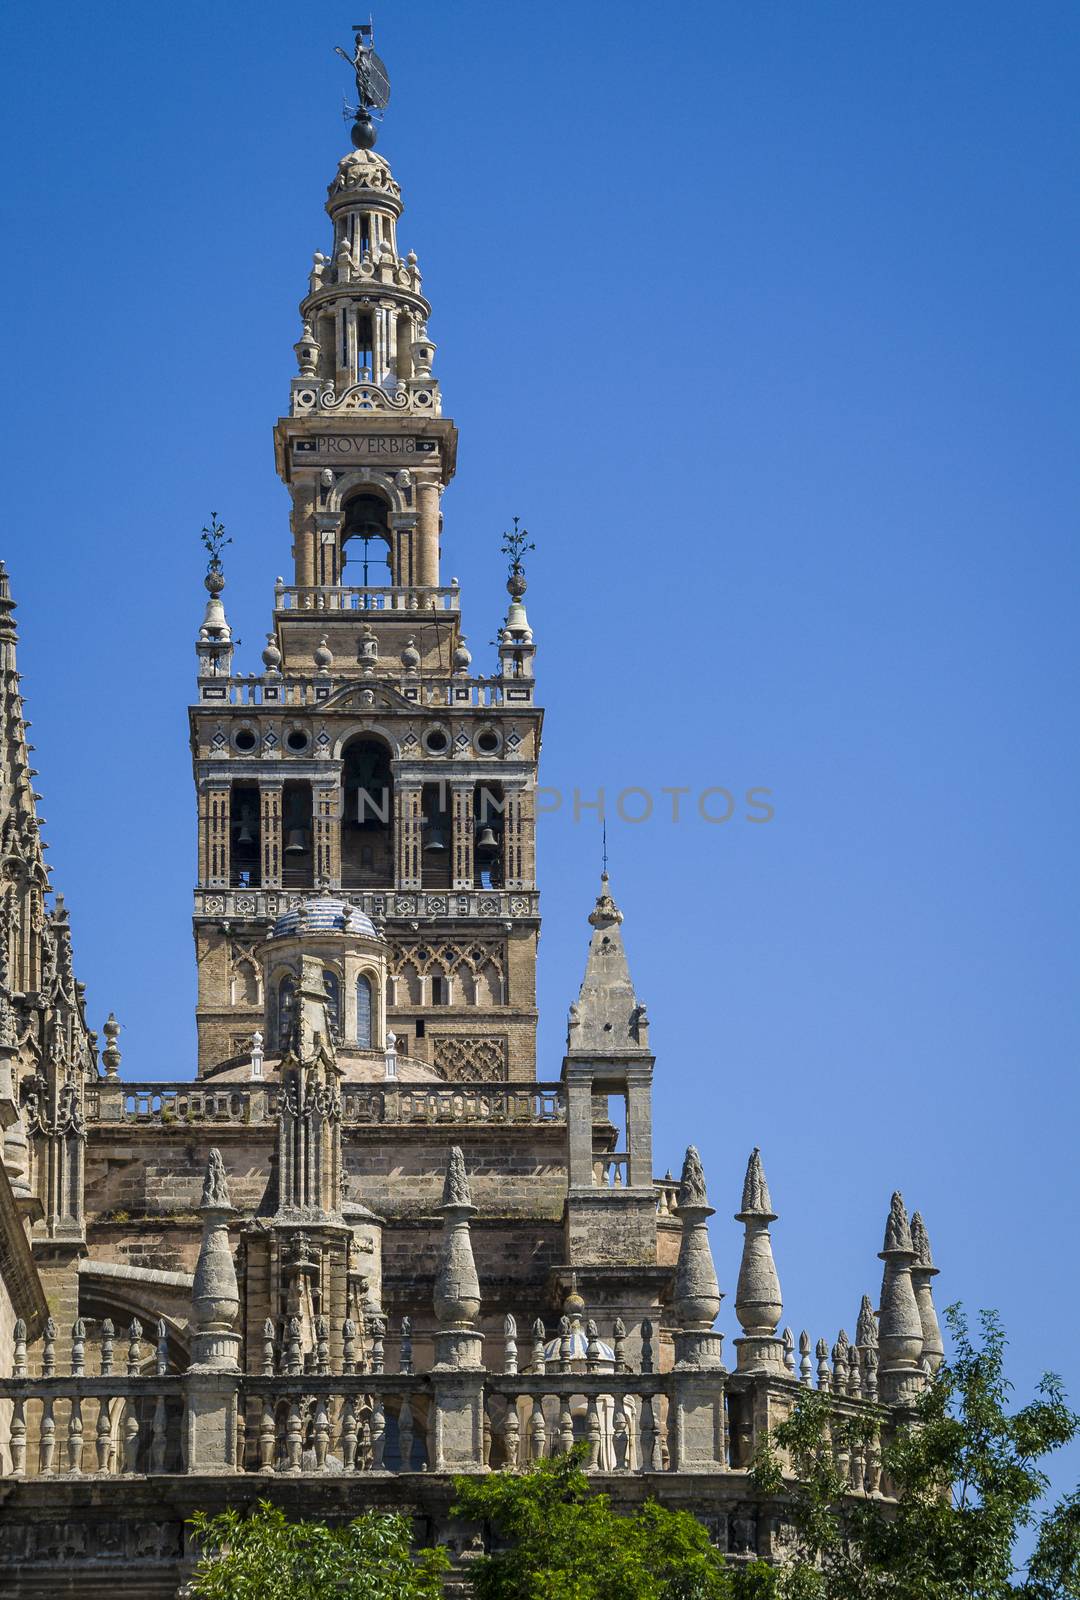 La Giralda Bell Tower of Seville. Spain